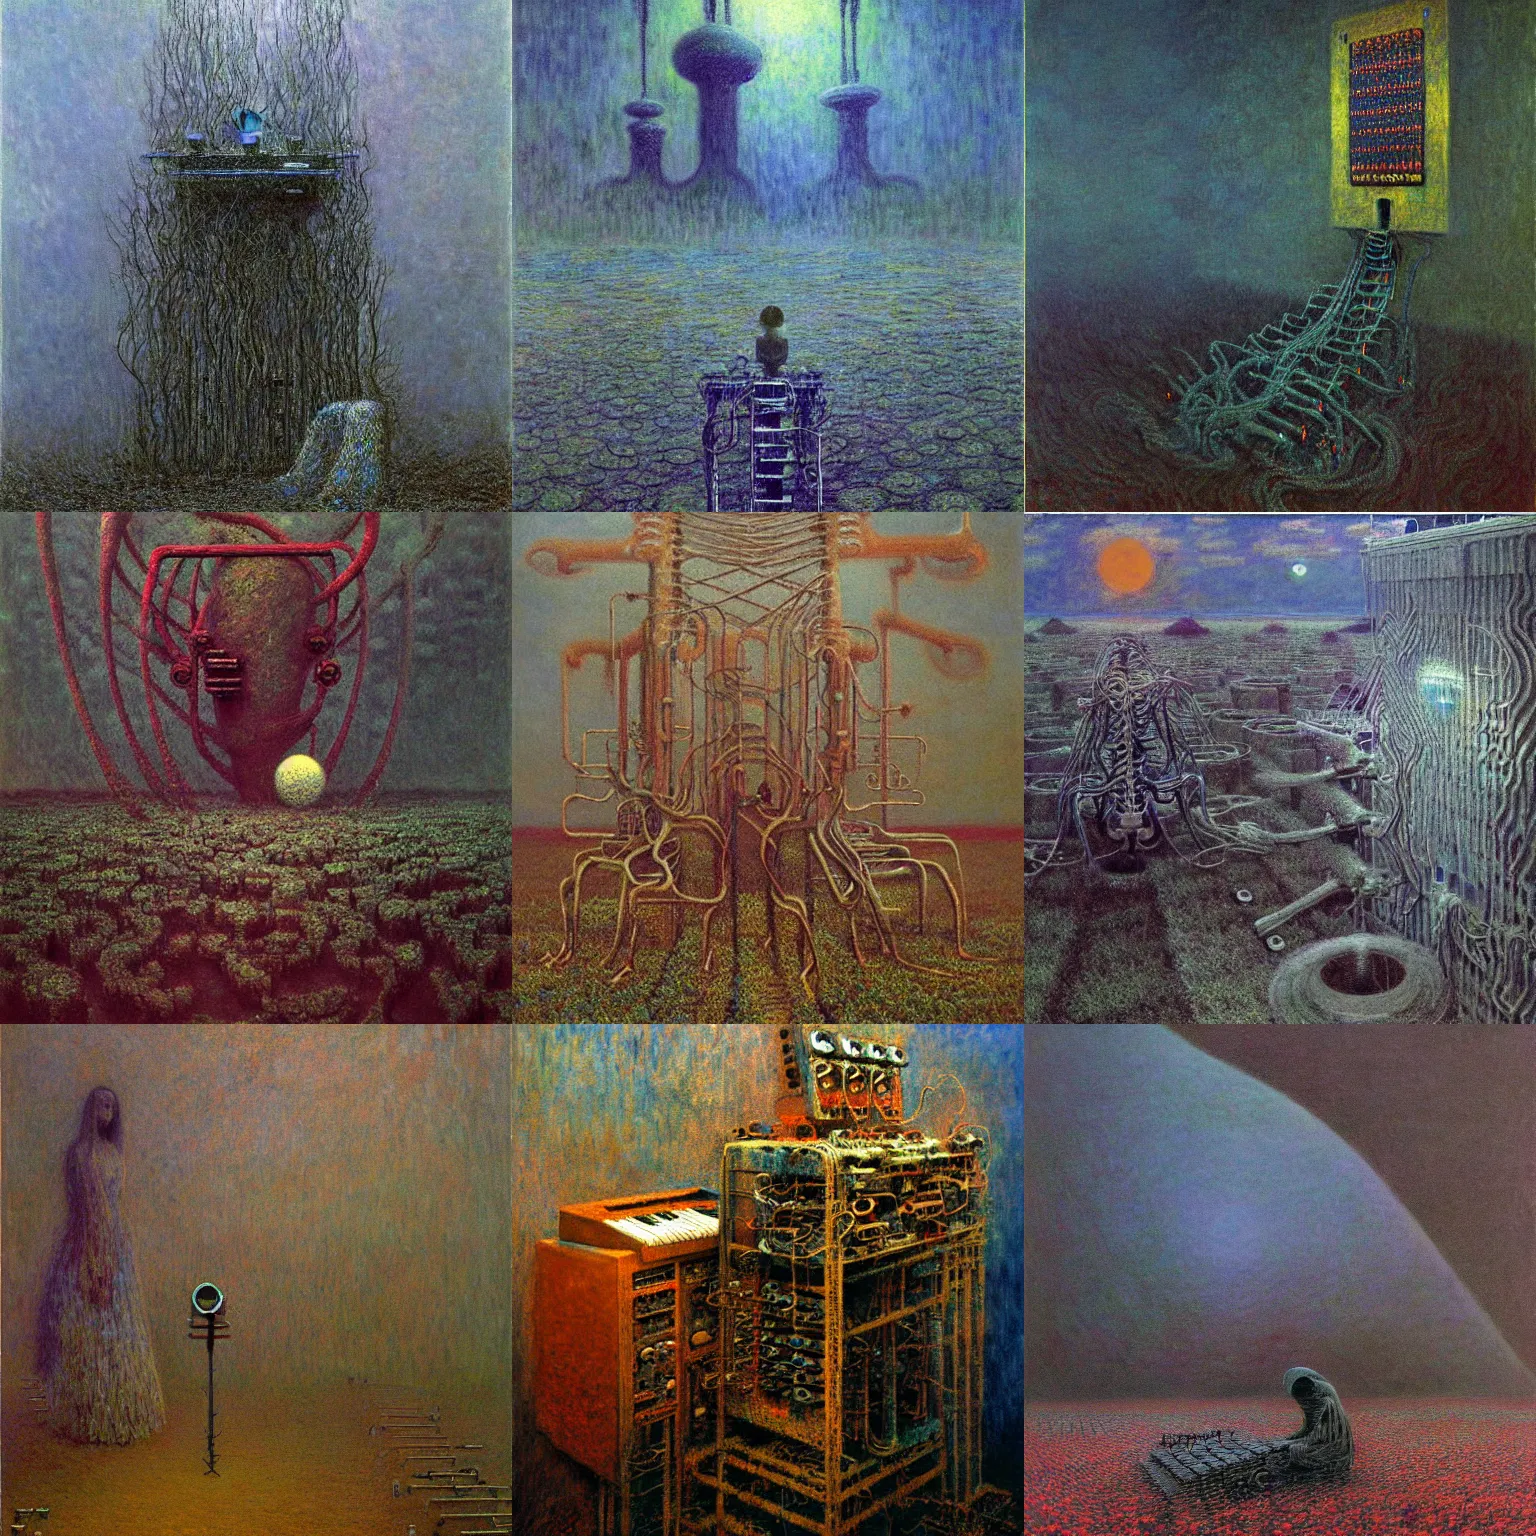 Prompt: zdislaw beksinski painting of a synthesizer, eerie eldritch art interpretation, mechanical, fantasy render, painting by claude monet